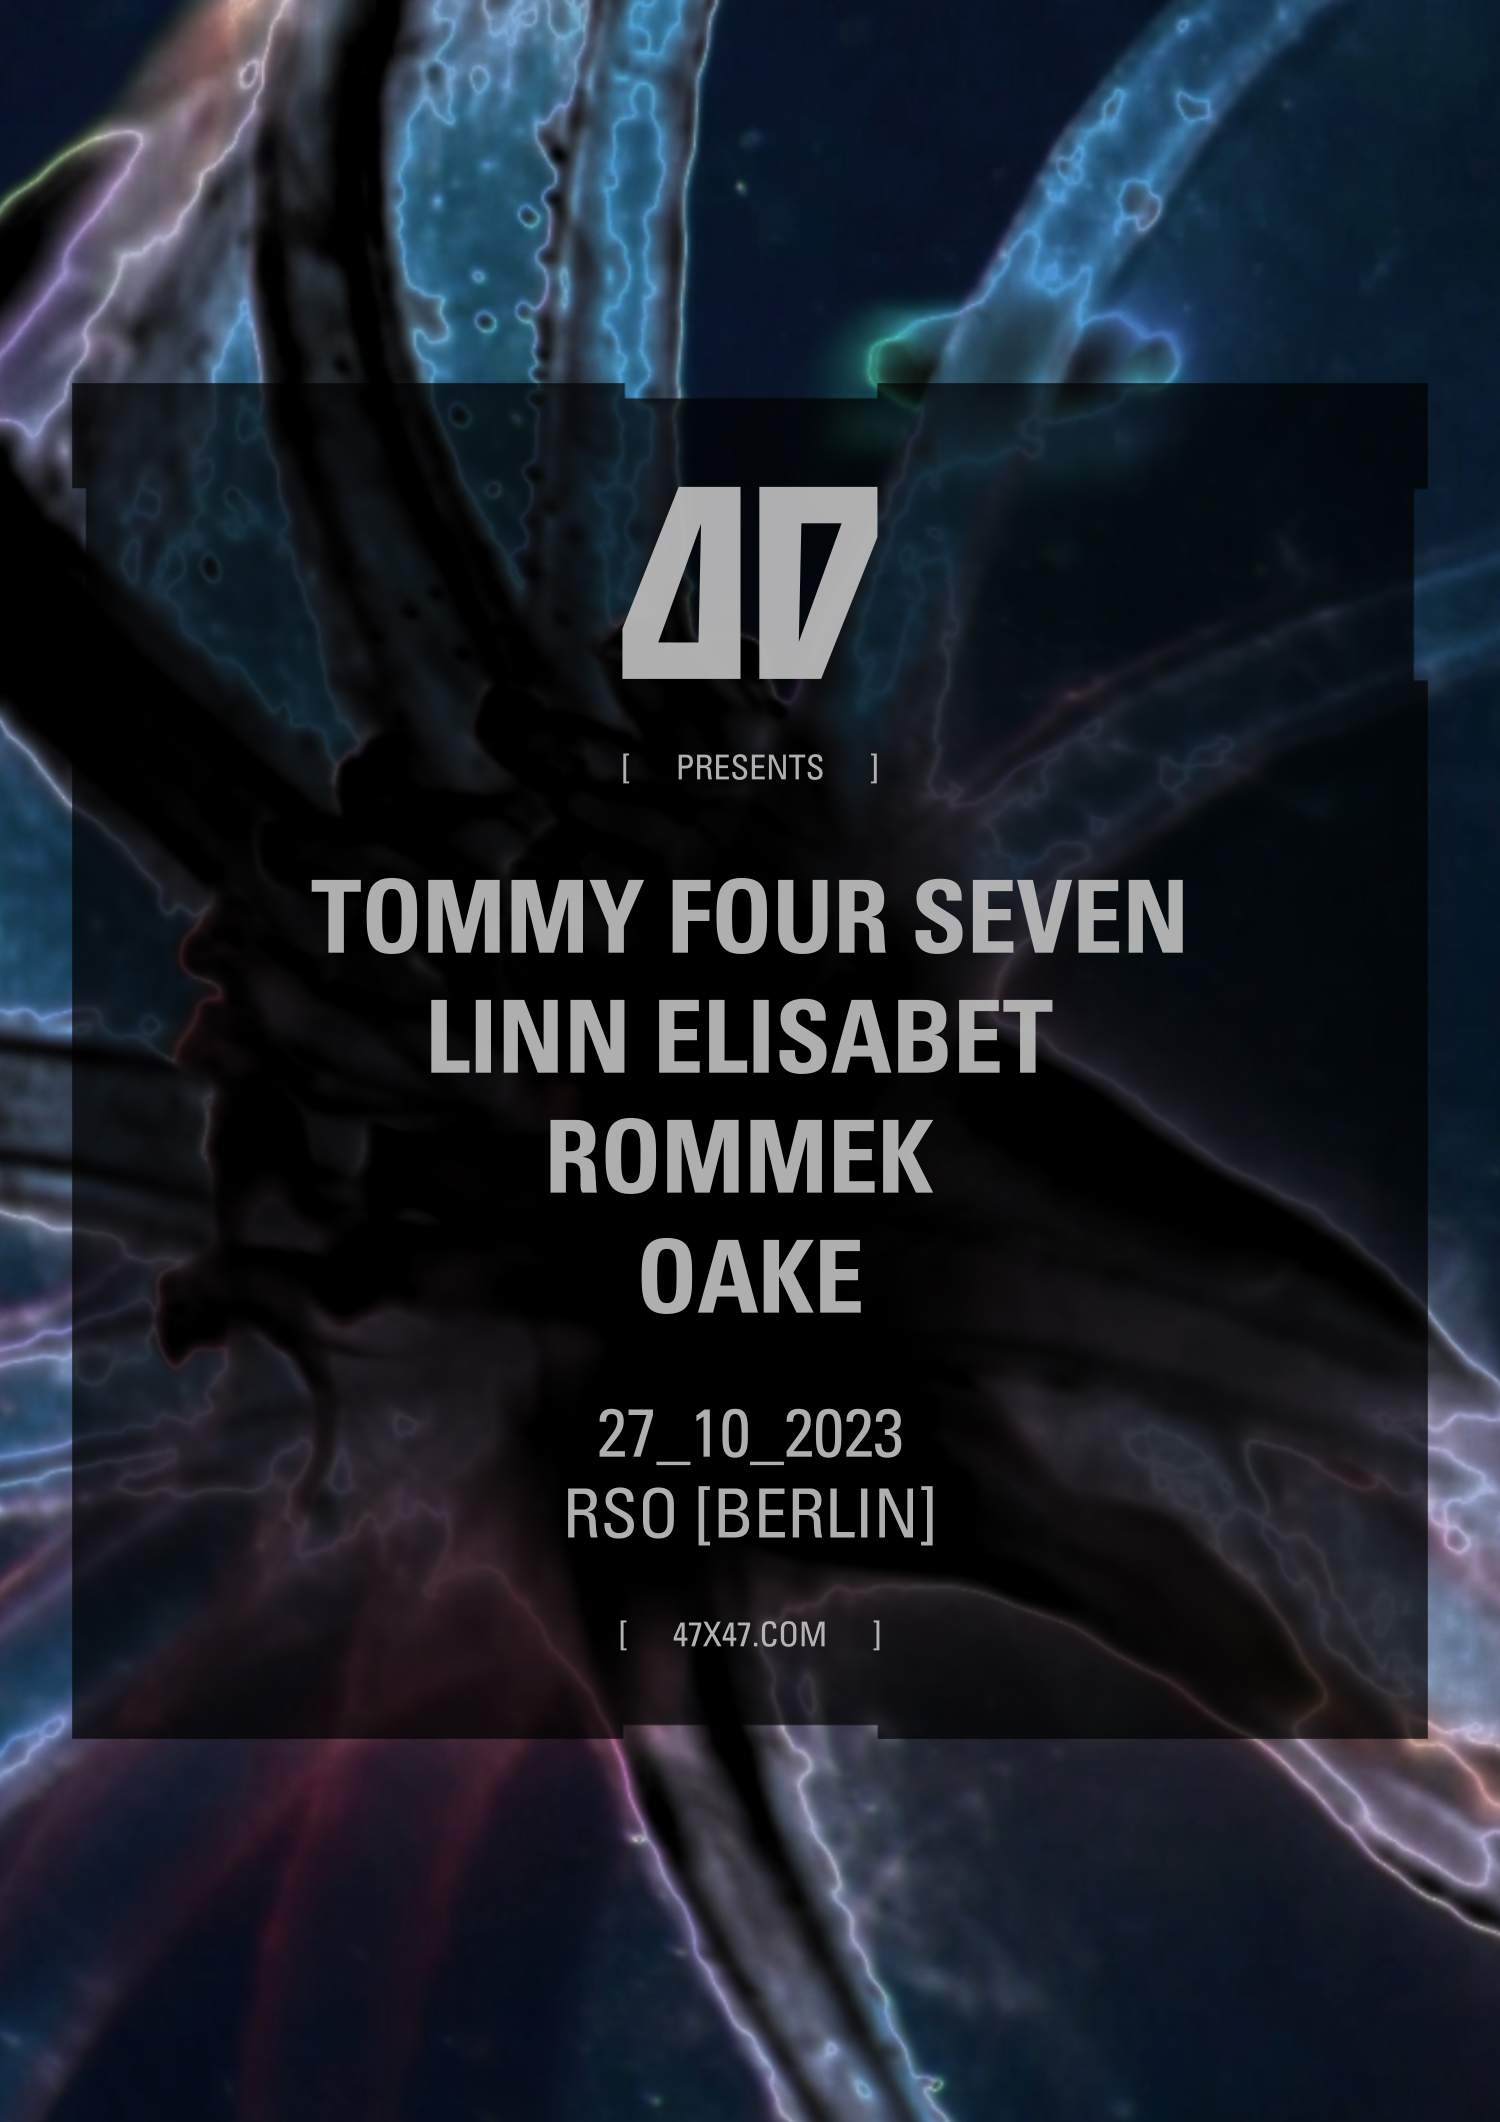 47 with Tommy Four Seven, Linn Elisabet, Rommek, OAKE - フライヤー表